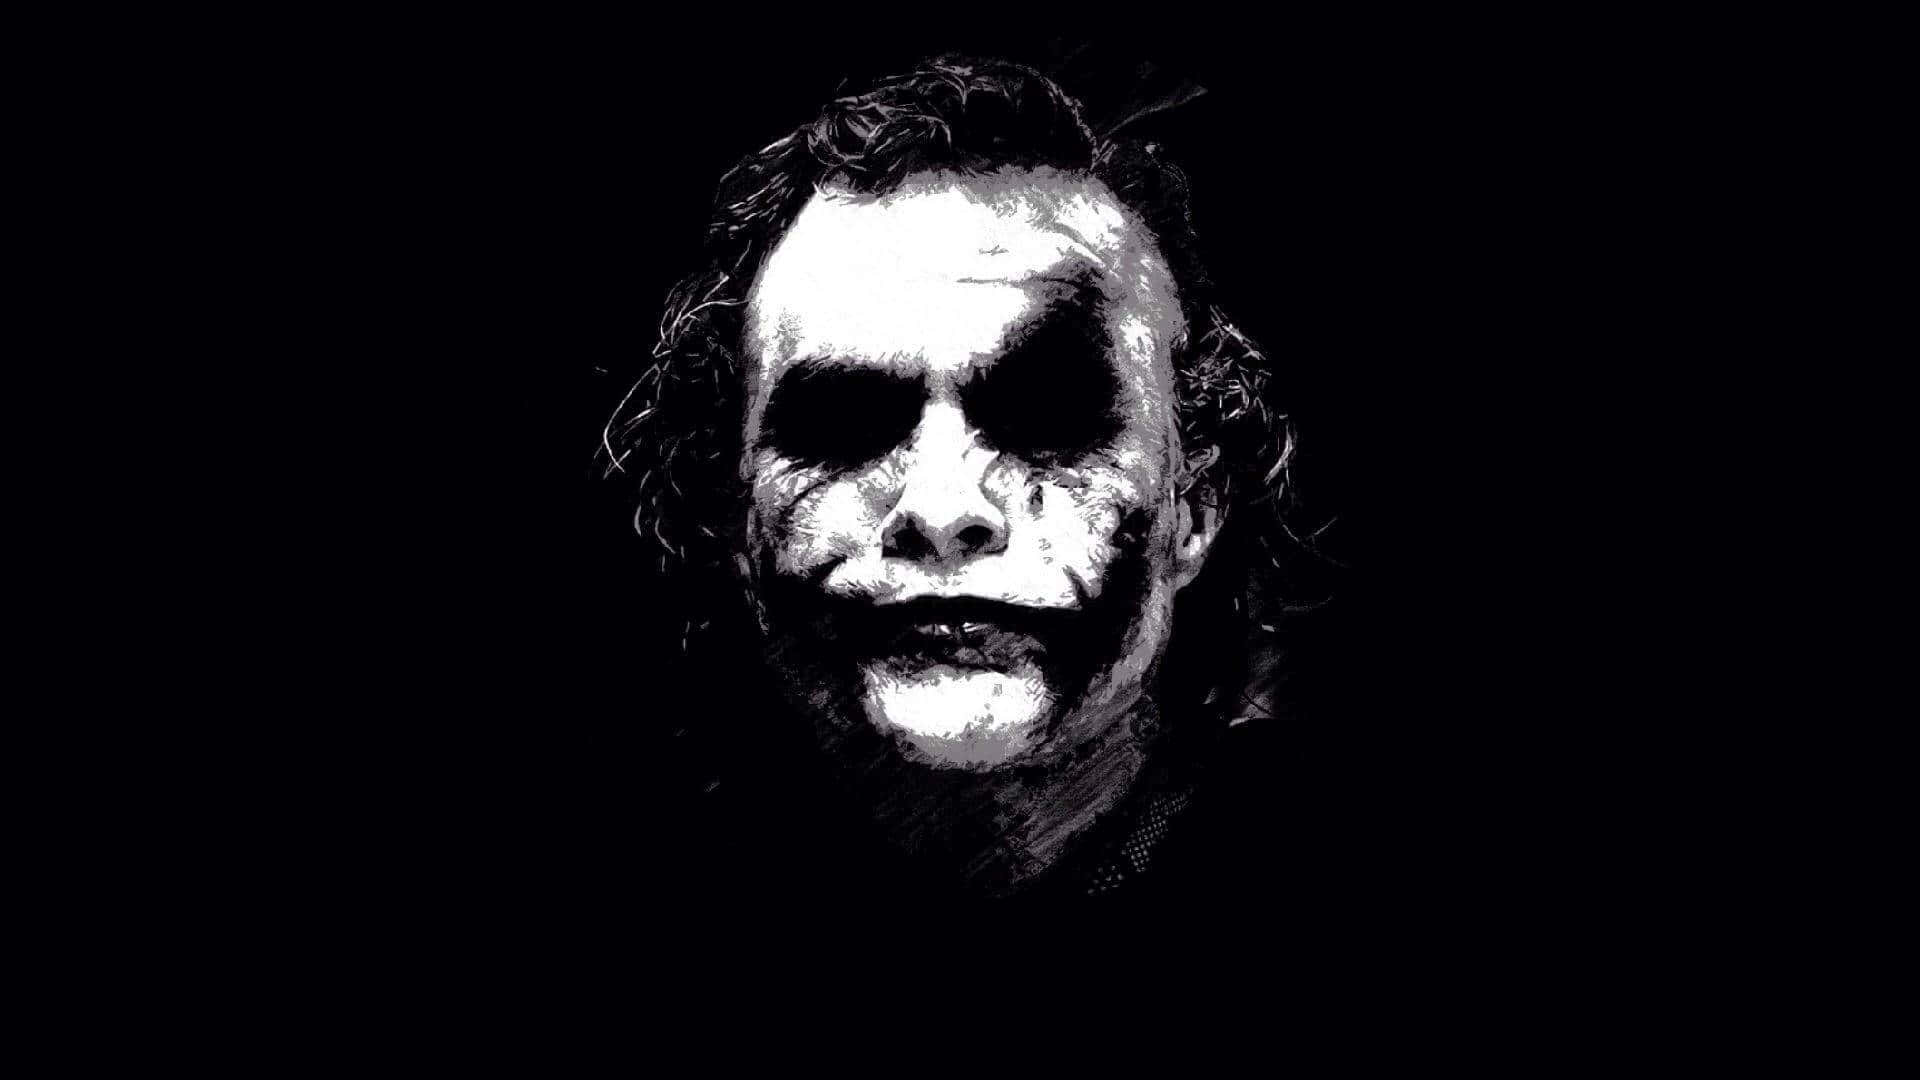 Free Black And White Joker Wallpaper Downloads, [100+] Black And White Joker  Wallpapers for FREE 